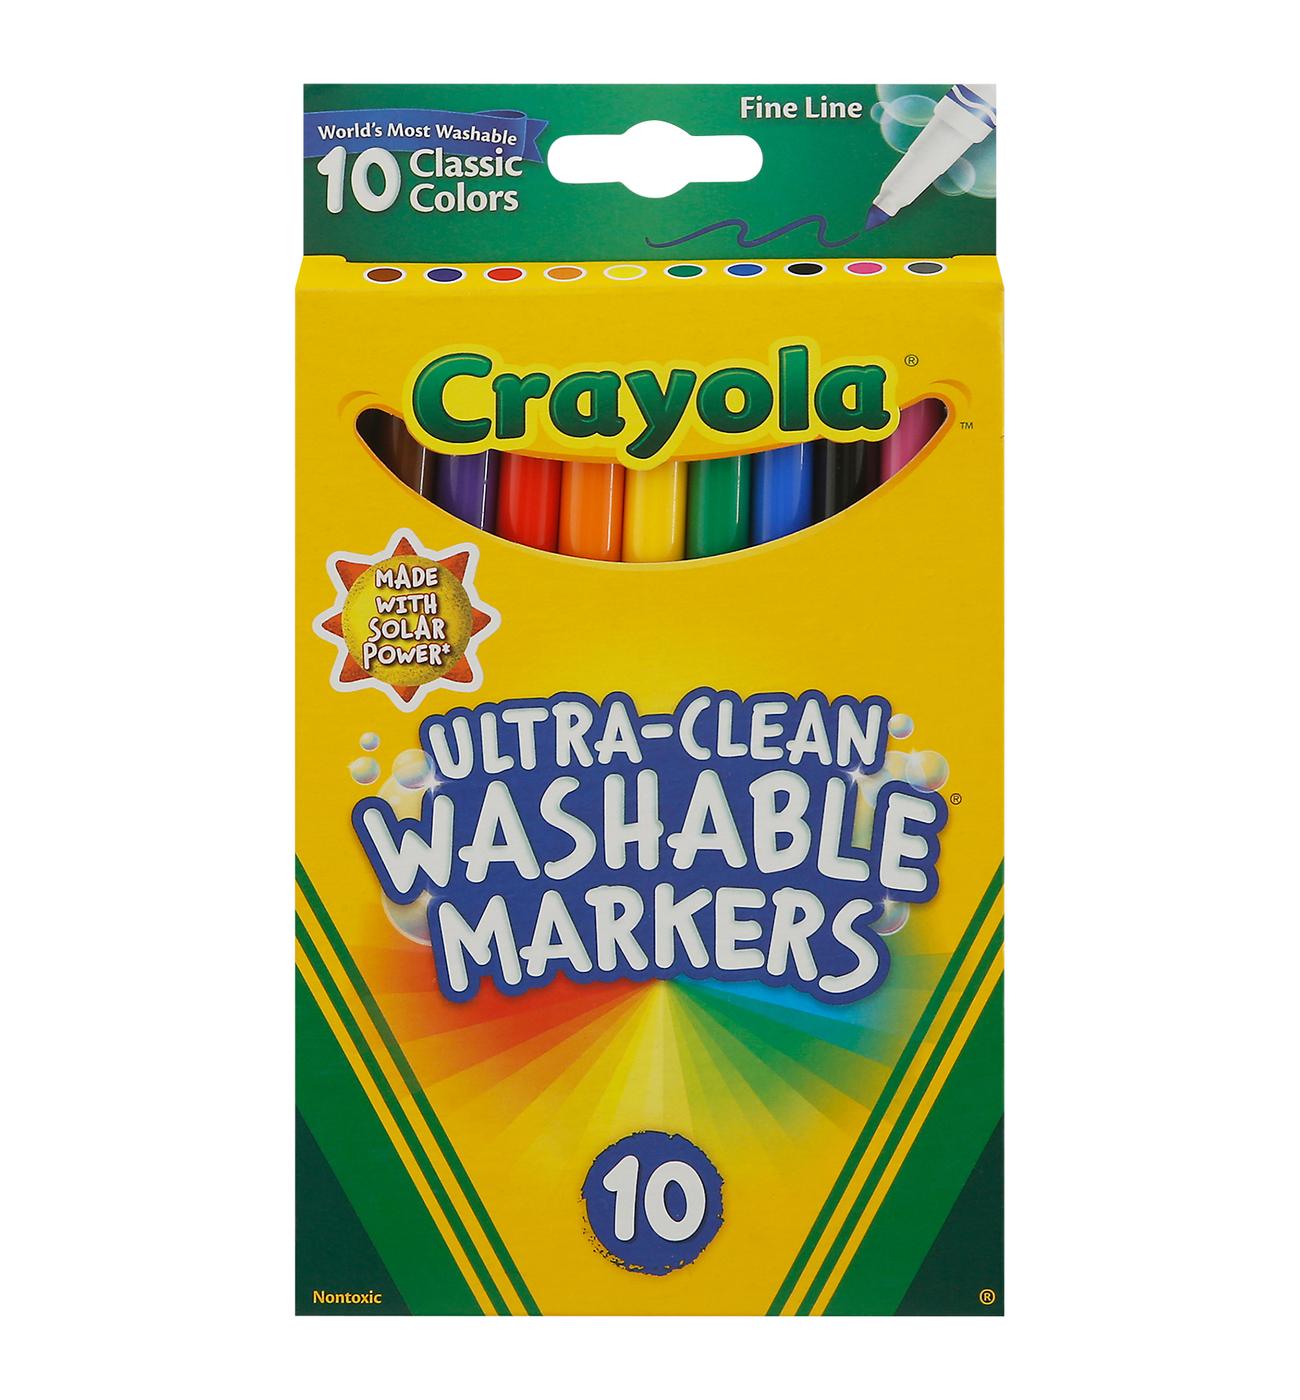 Crayola Bathtub Markers - Shop Bath Accessories at H-E-B